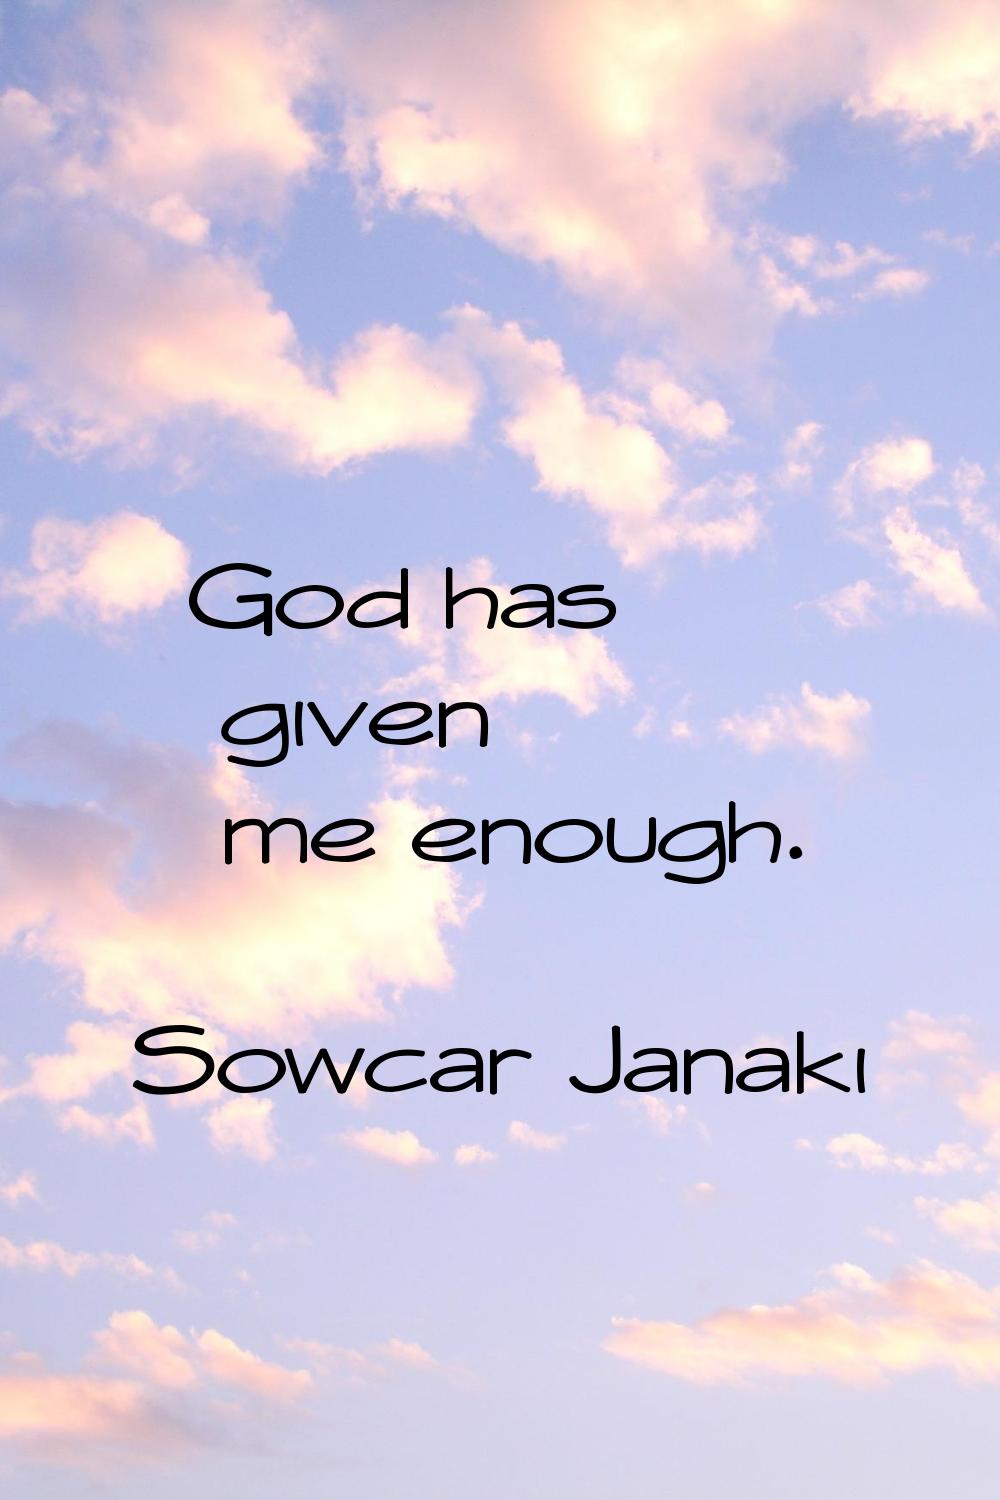 God has given me enough.